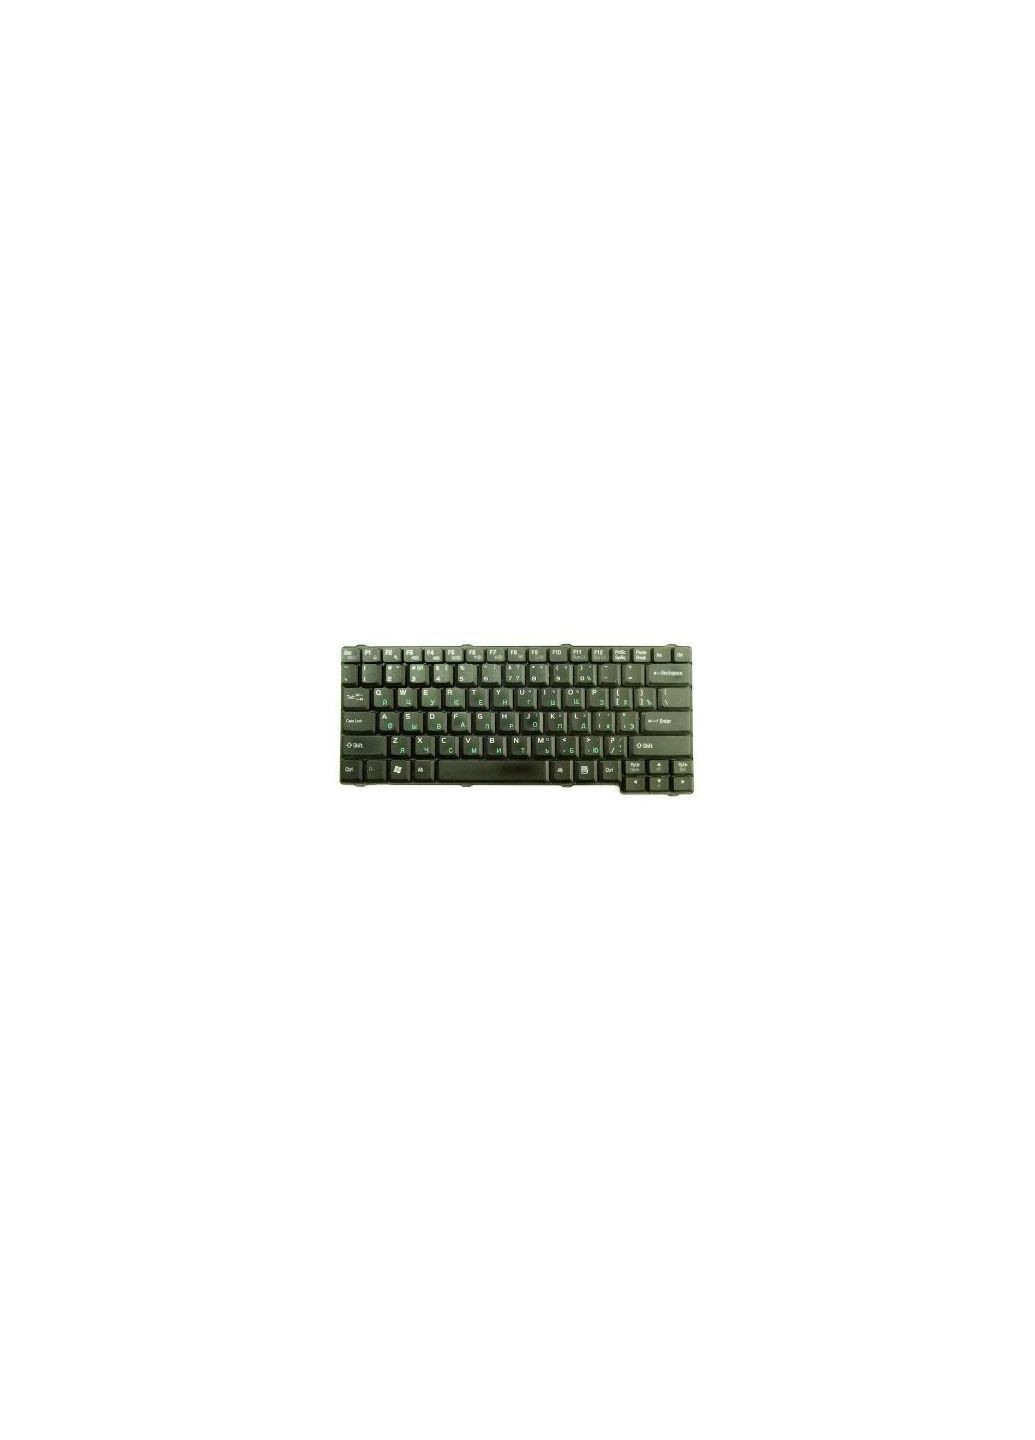 Клавиатура для ноутбука MP03263US-9202/V-0208BIDS1-US (A43322) Toshiba mp-03263us-9202/v-0208bids1-us (276706385)